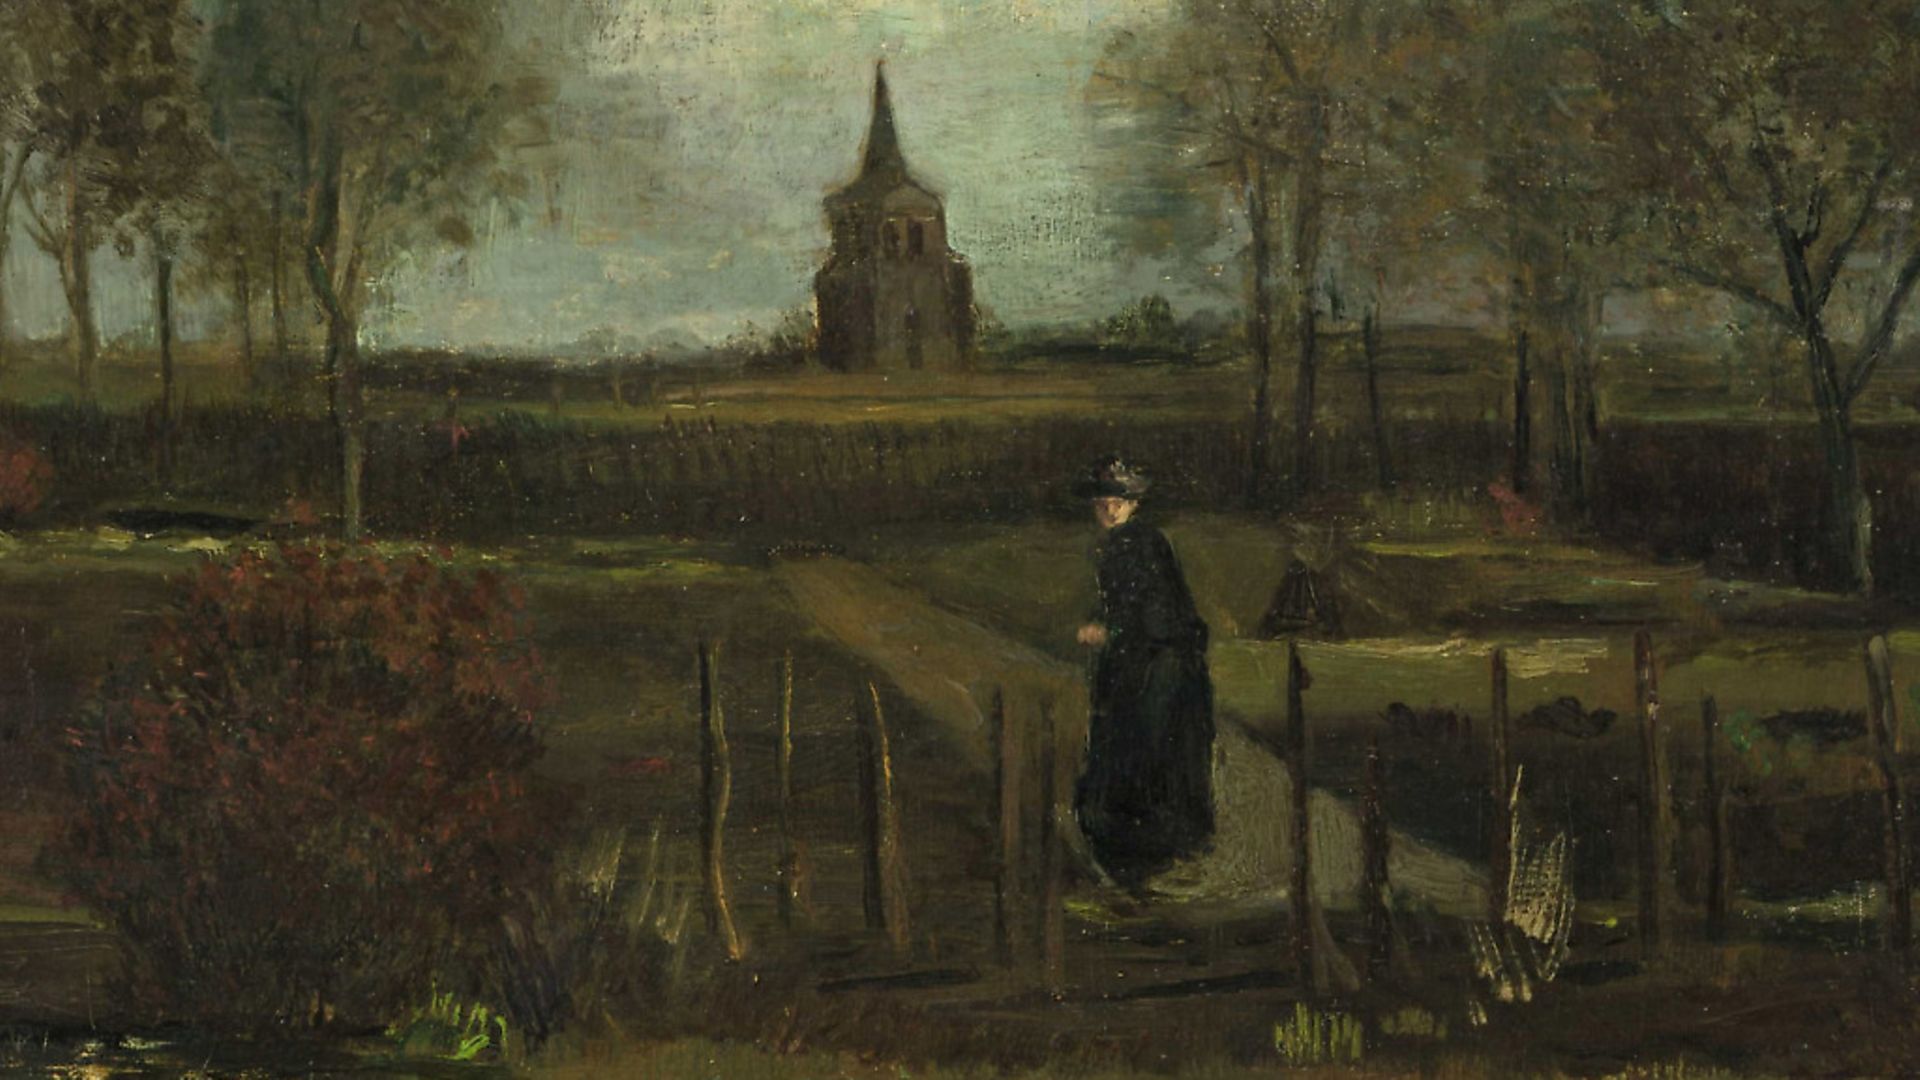 A painting by Vincent van Gogh. But which one? (Question six) - Credit: HANDOUT/Marten de Leeuw/EPA-EFE/